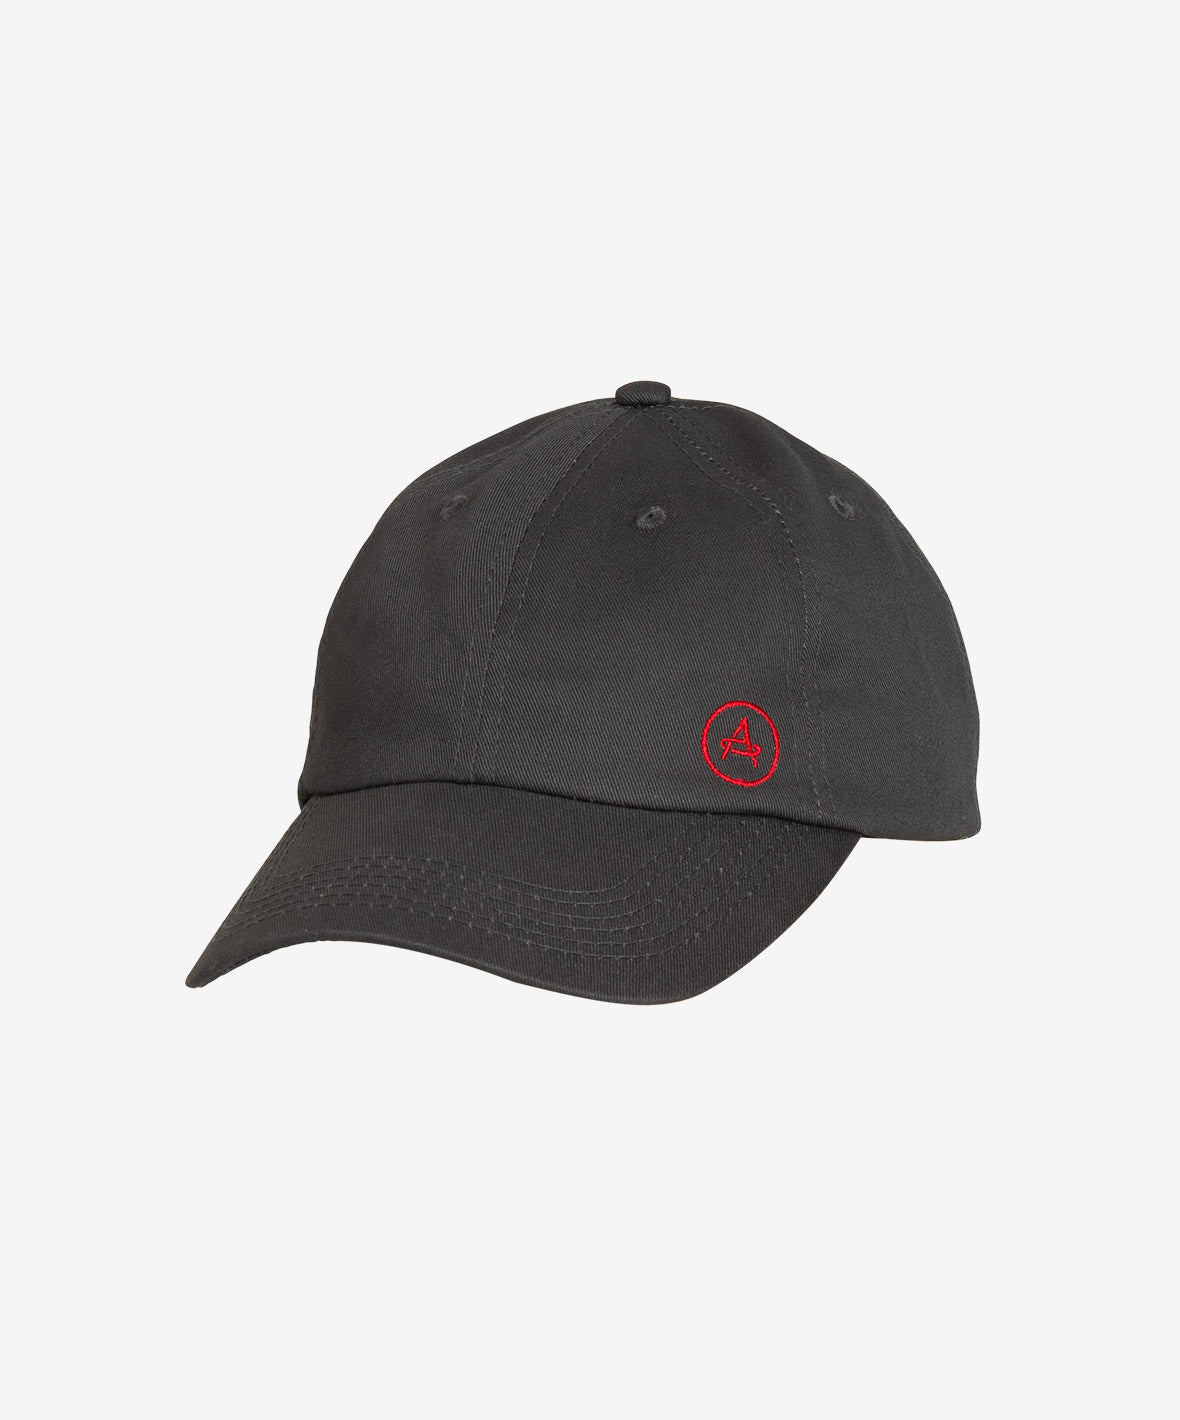 dark grey hat from AETHER Apparel